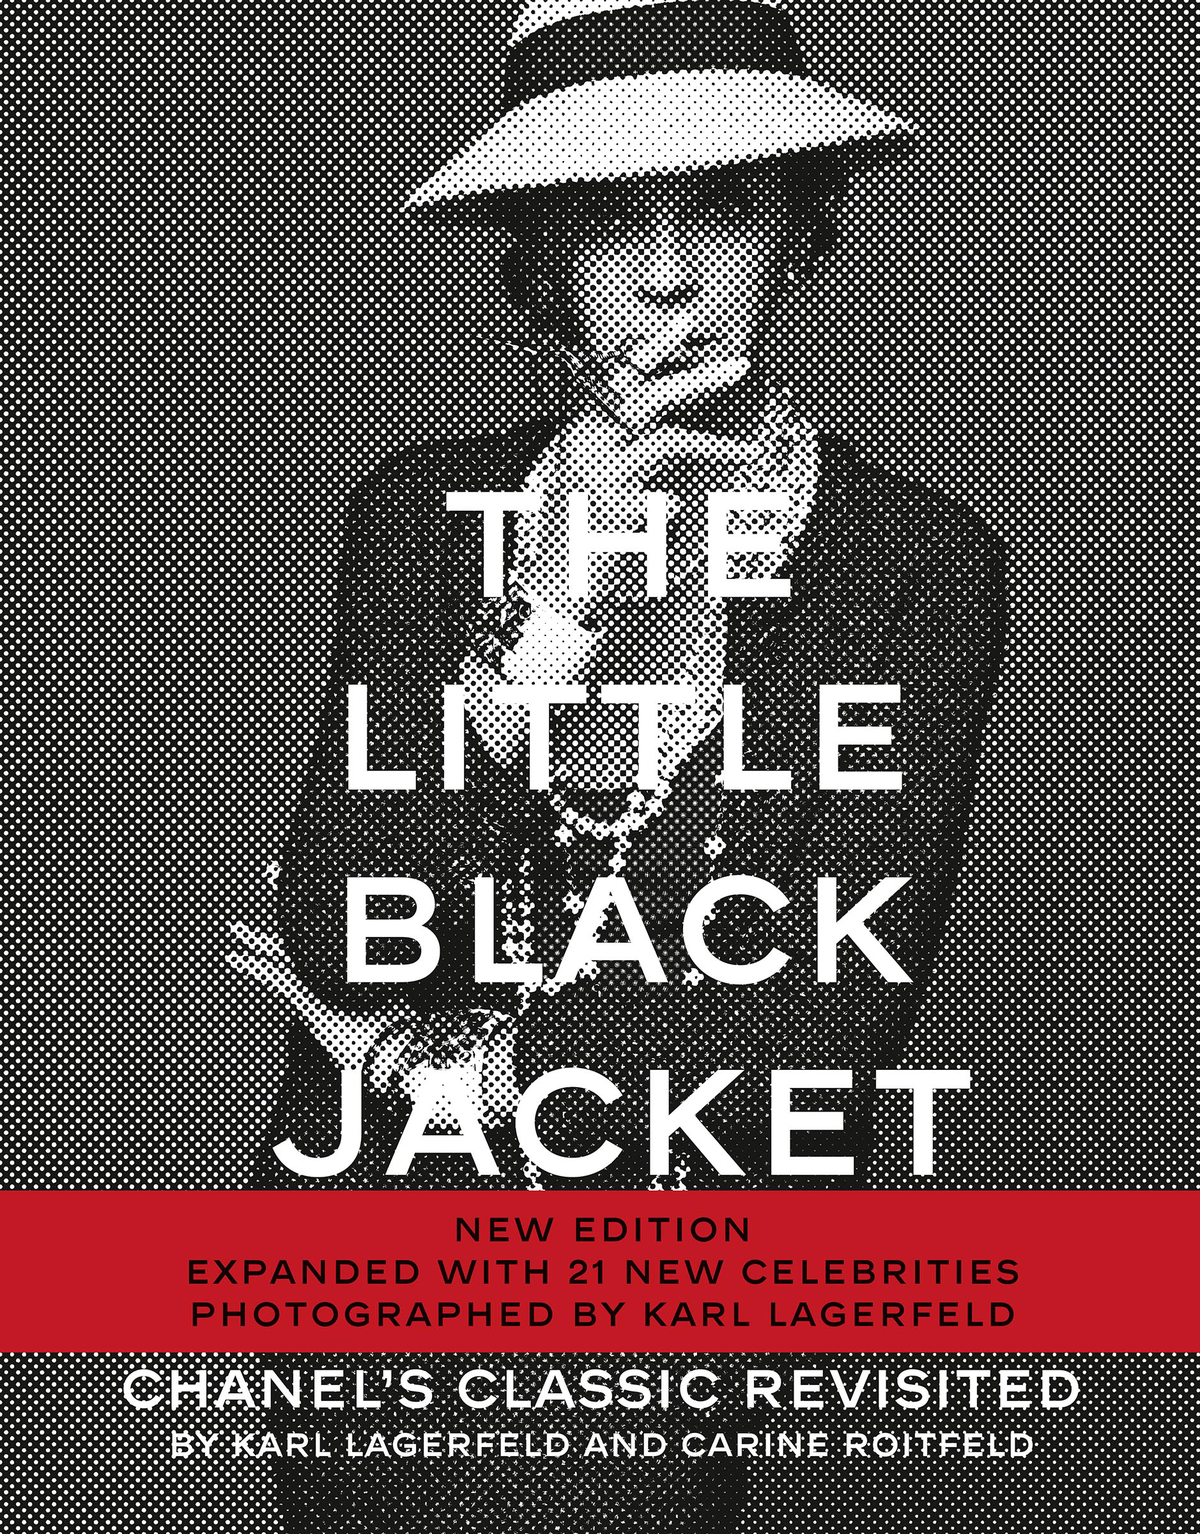 The Little Black Jacket - Karl Lagerfeld, Carine Roitfeld - Steidl 